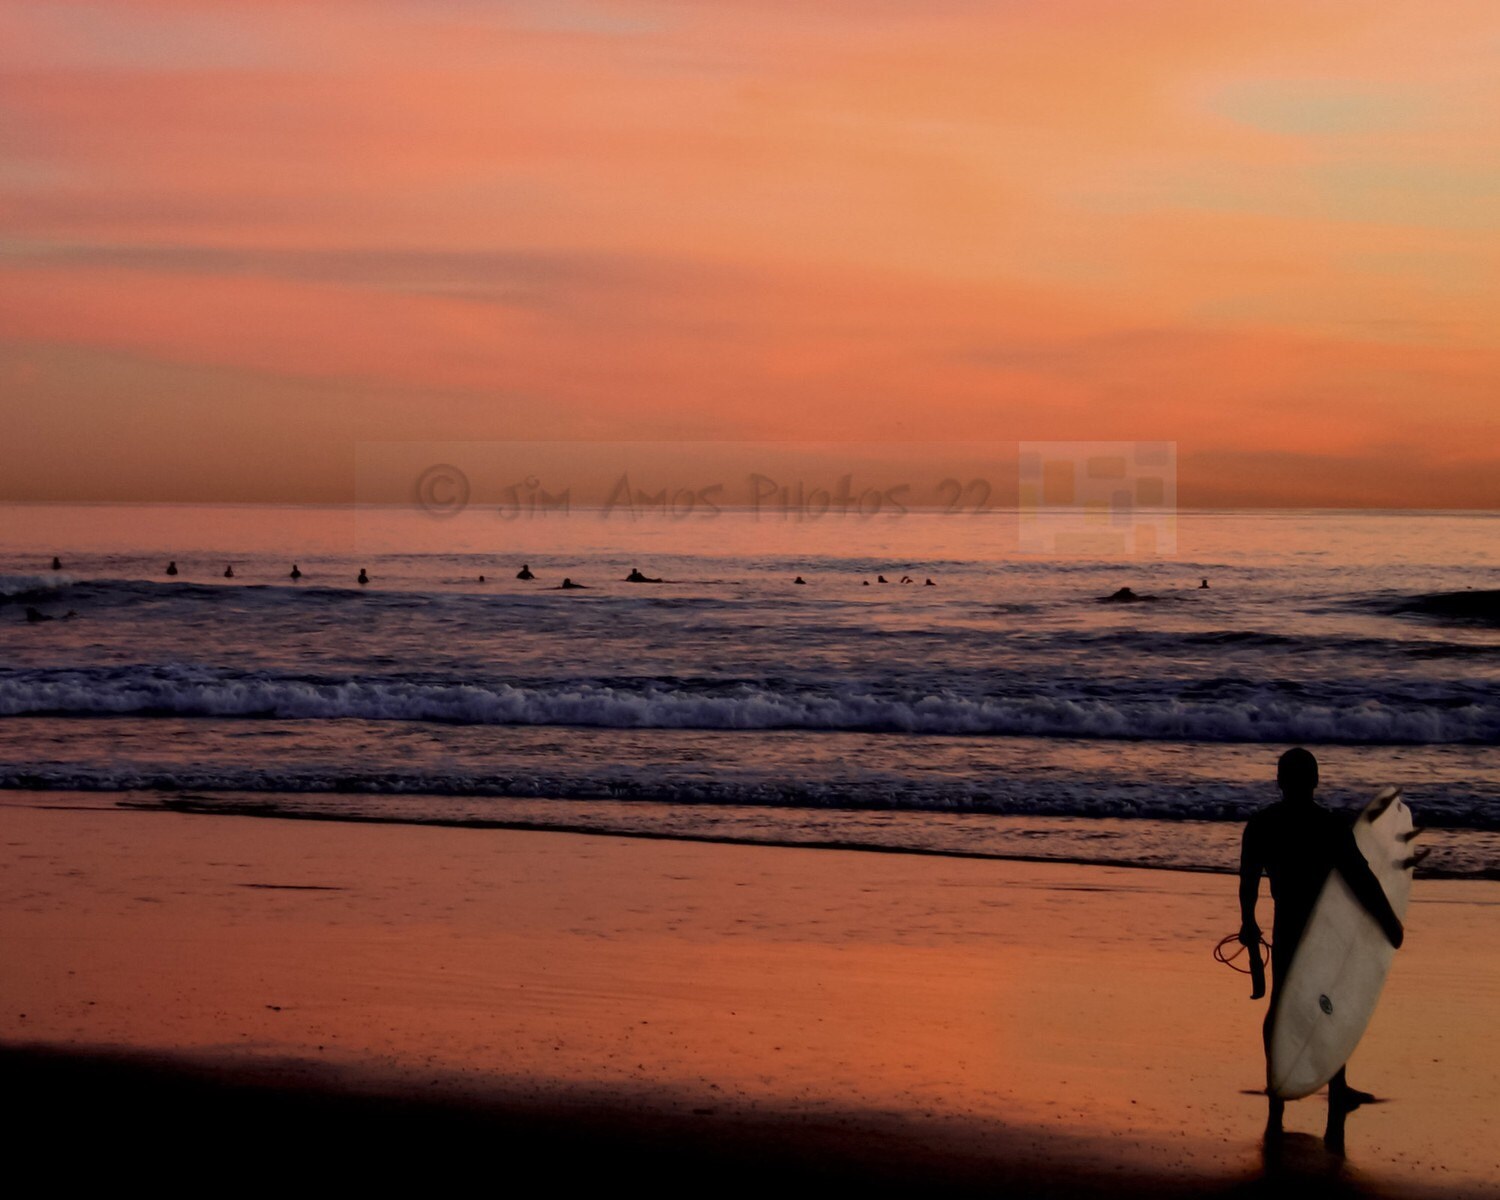 sunset surfing